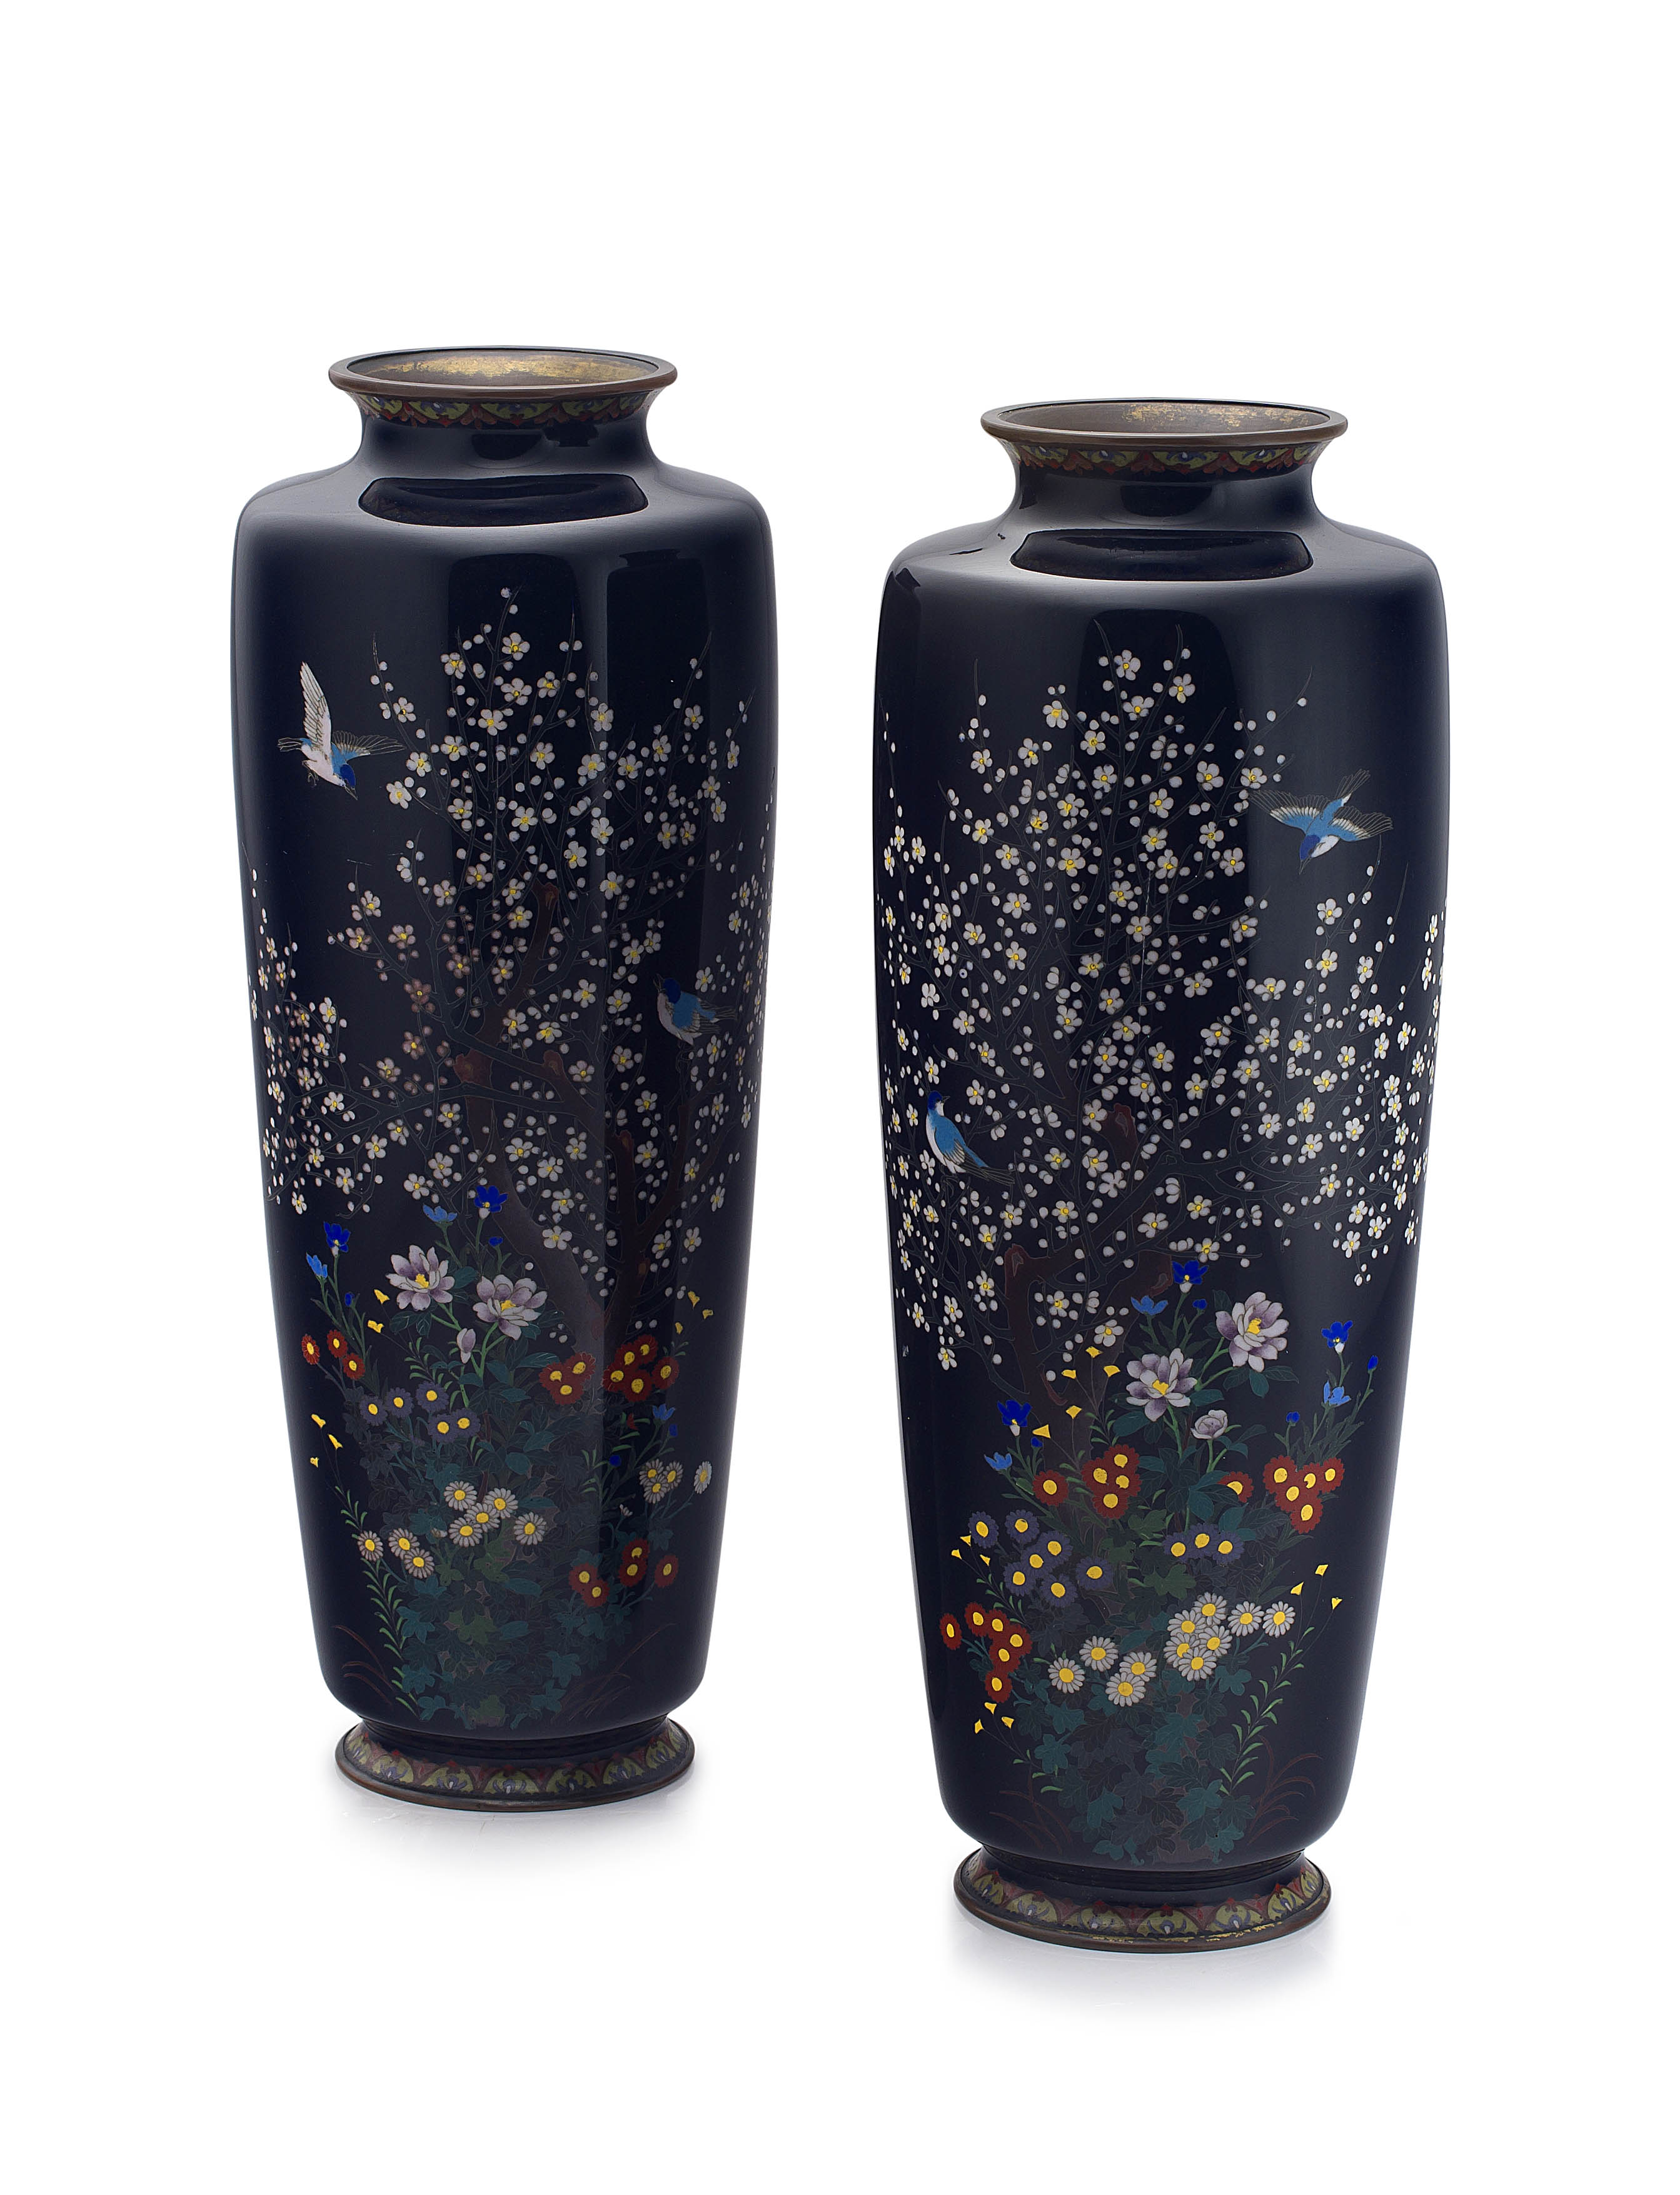 A matching pair of Japanese cloisonné enamel vases, Gonda Hirosuke, Meiji period, 1868-1912